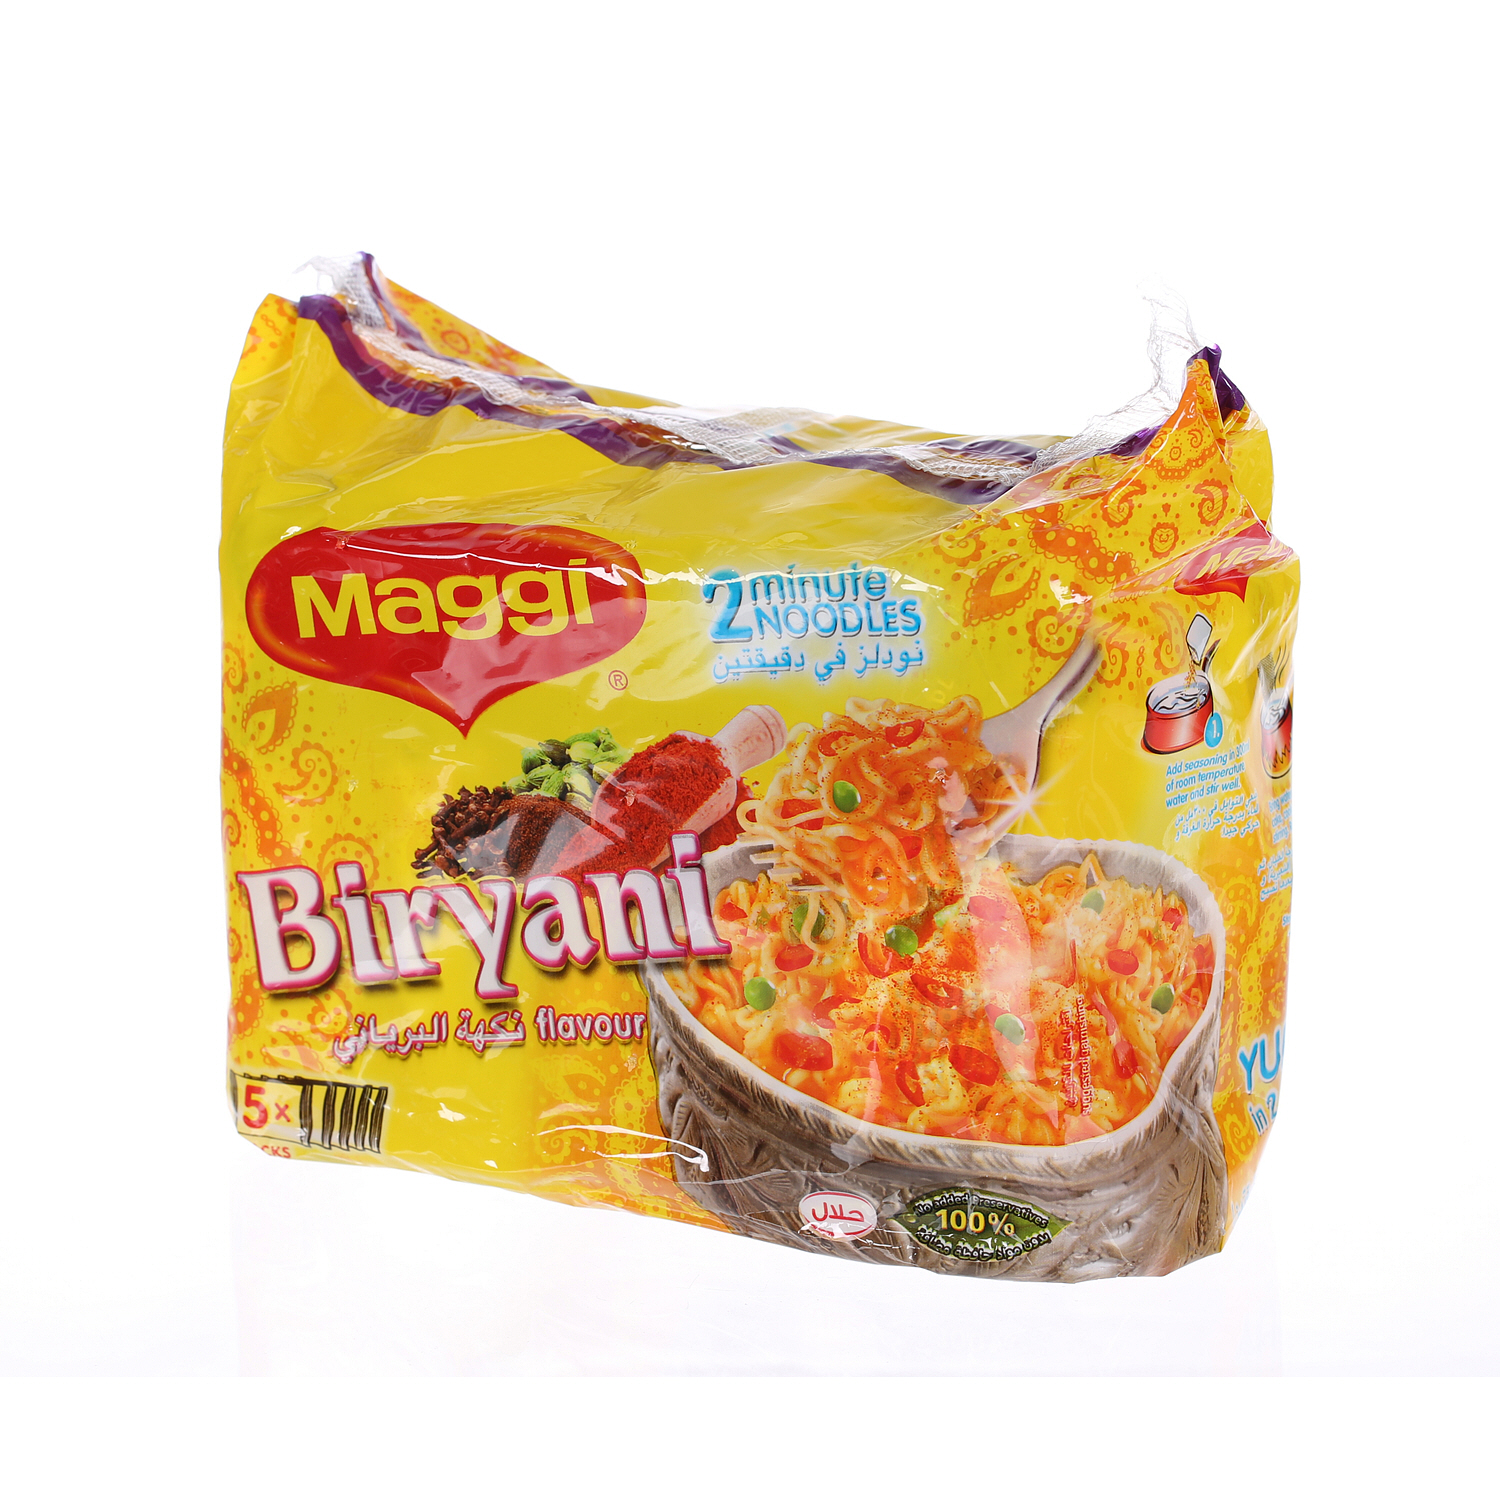 Maggi 2 Minute Noodles Biryani Flavor 77gm × 5'S